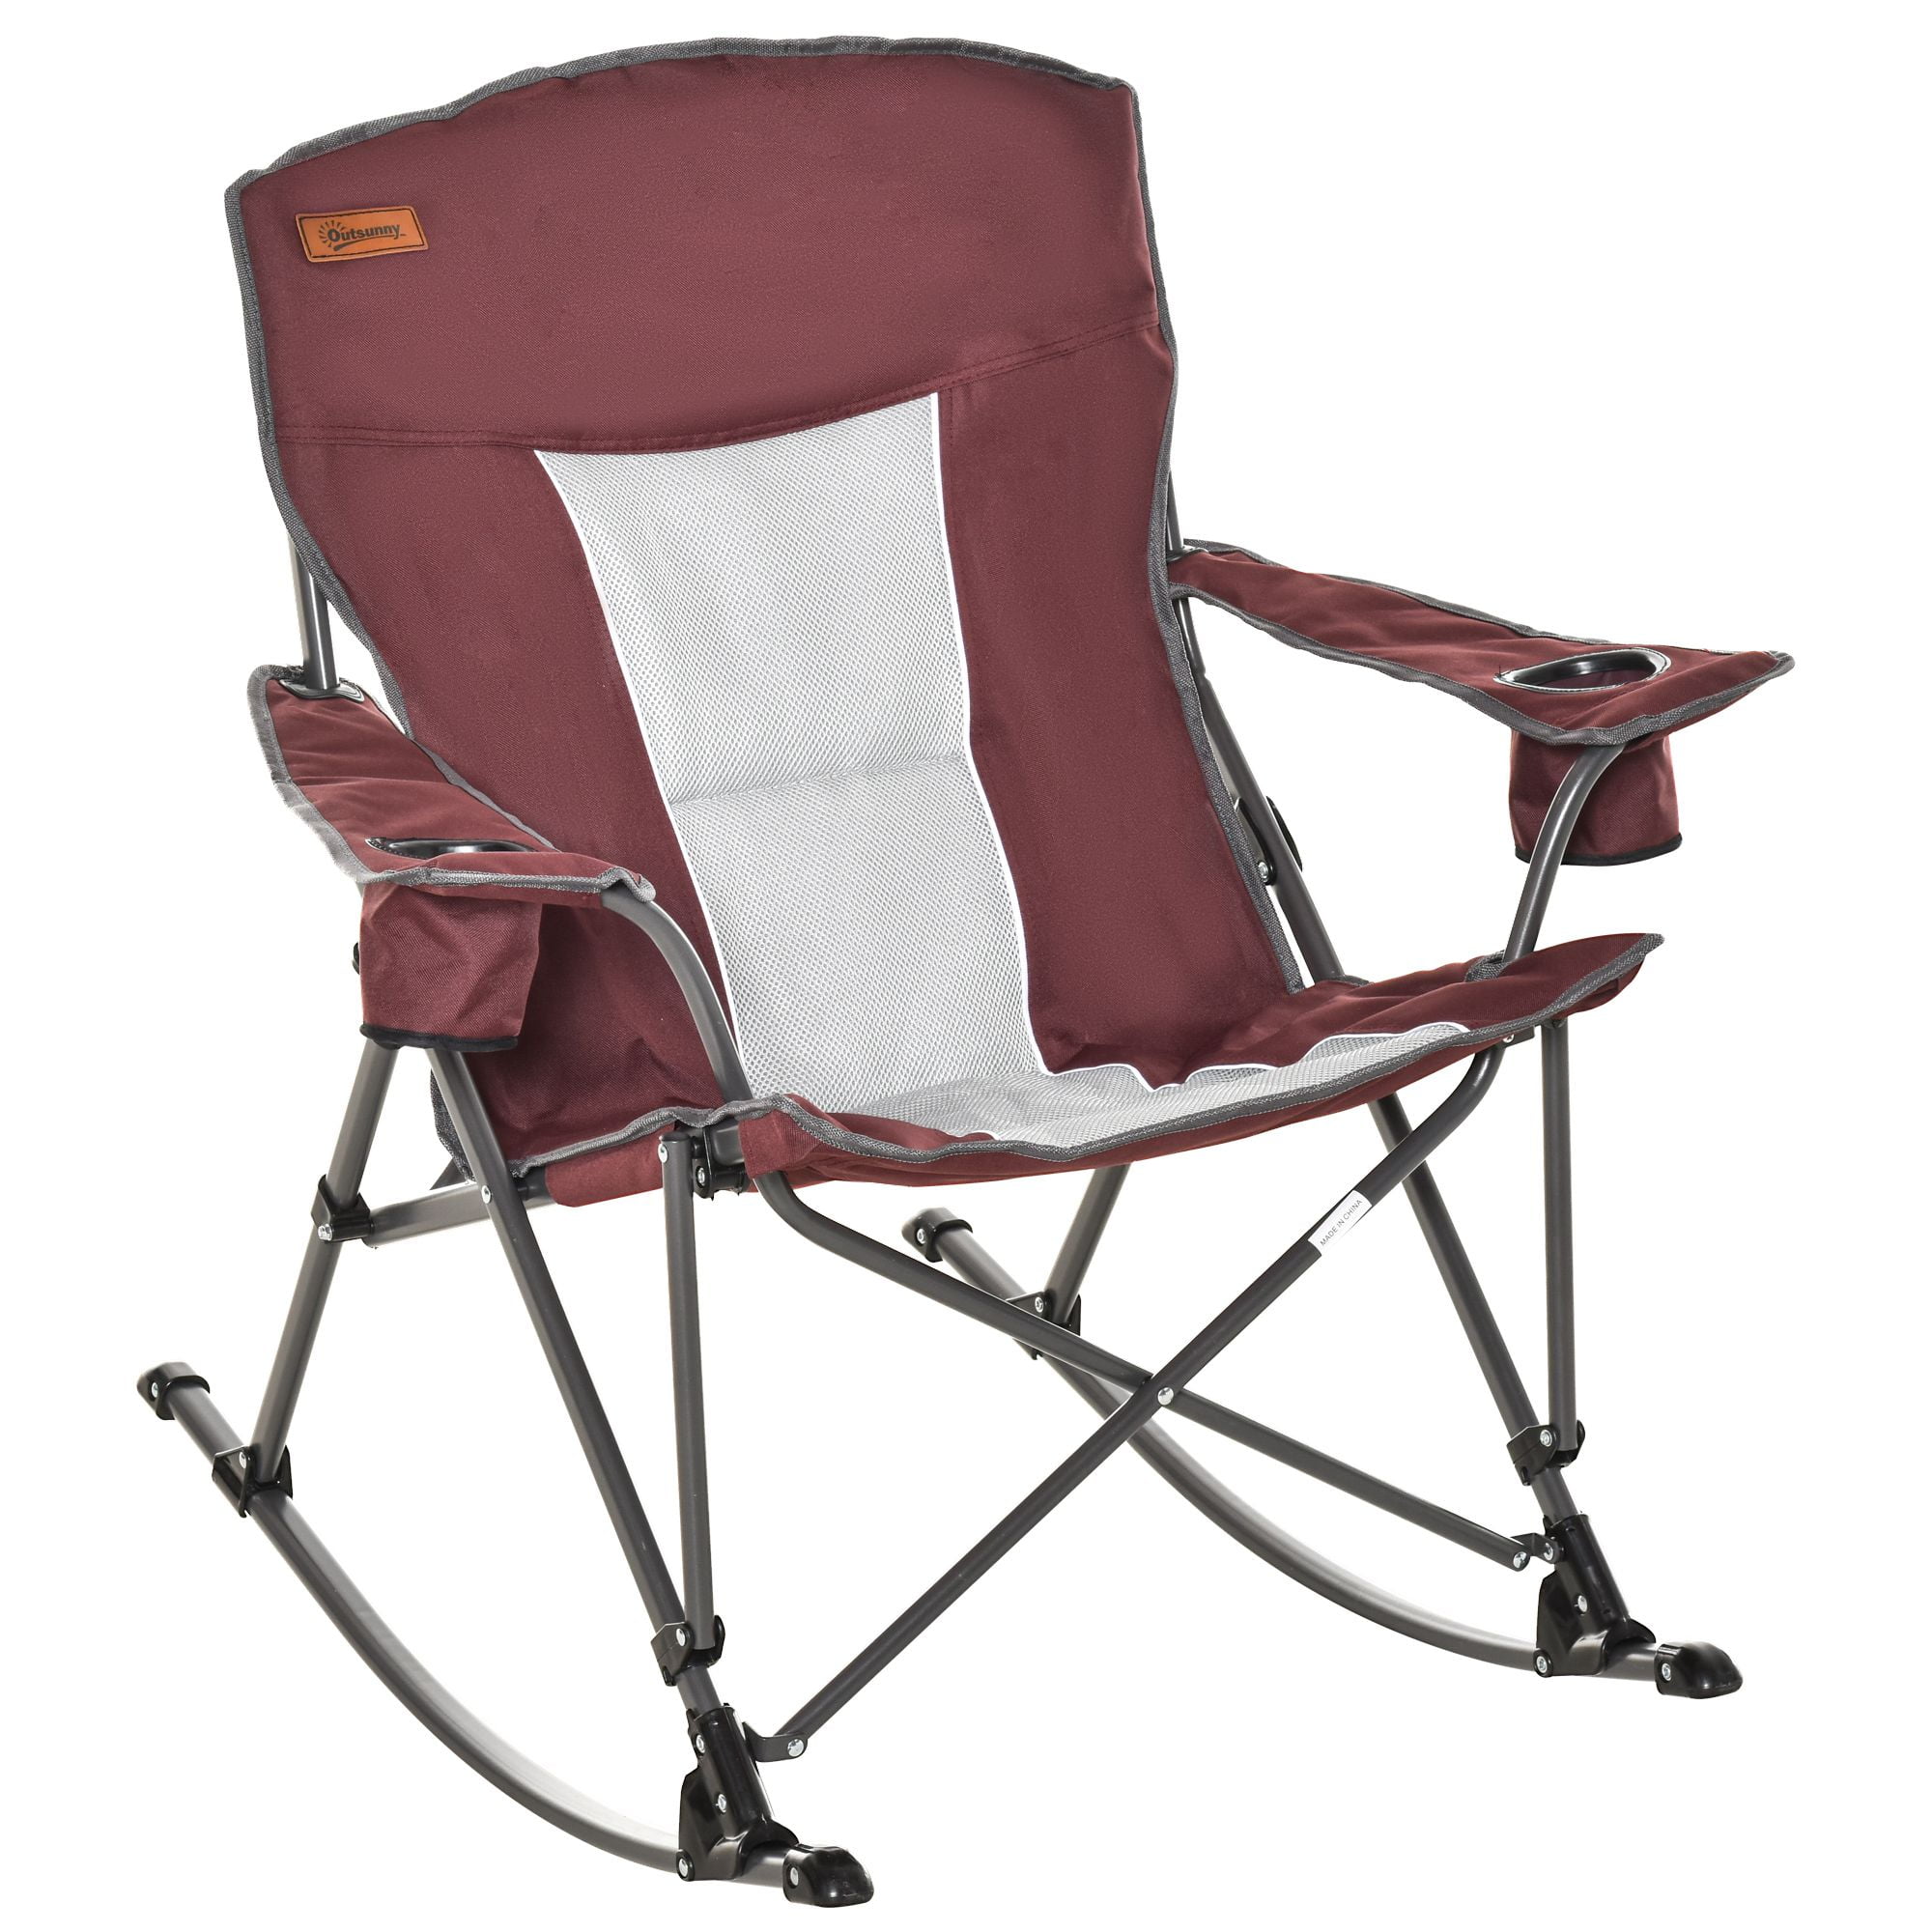 GCI Outdoor Freestyle Rocker Portable Folding Rocking Chair 